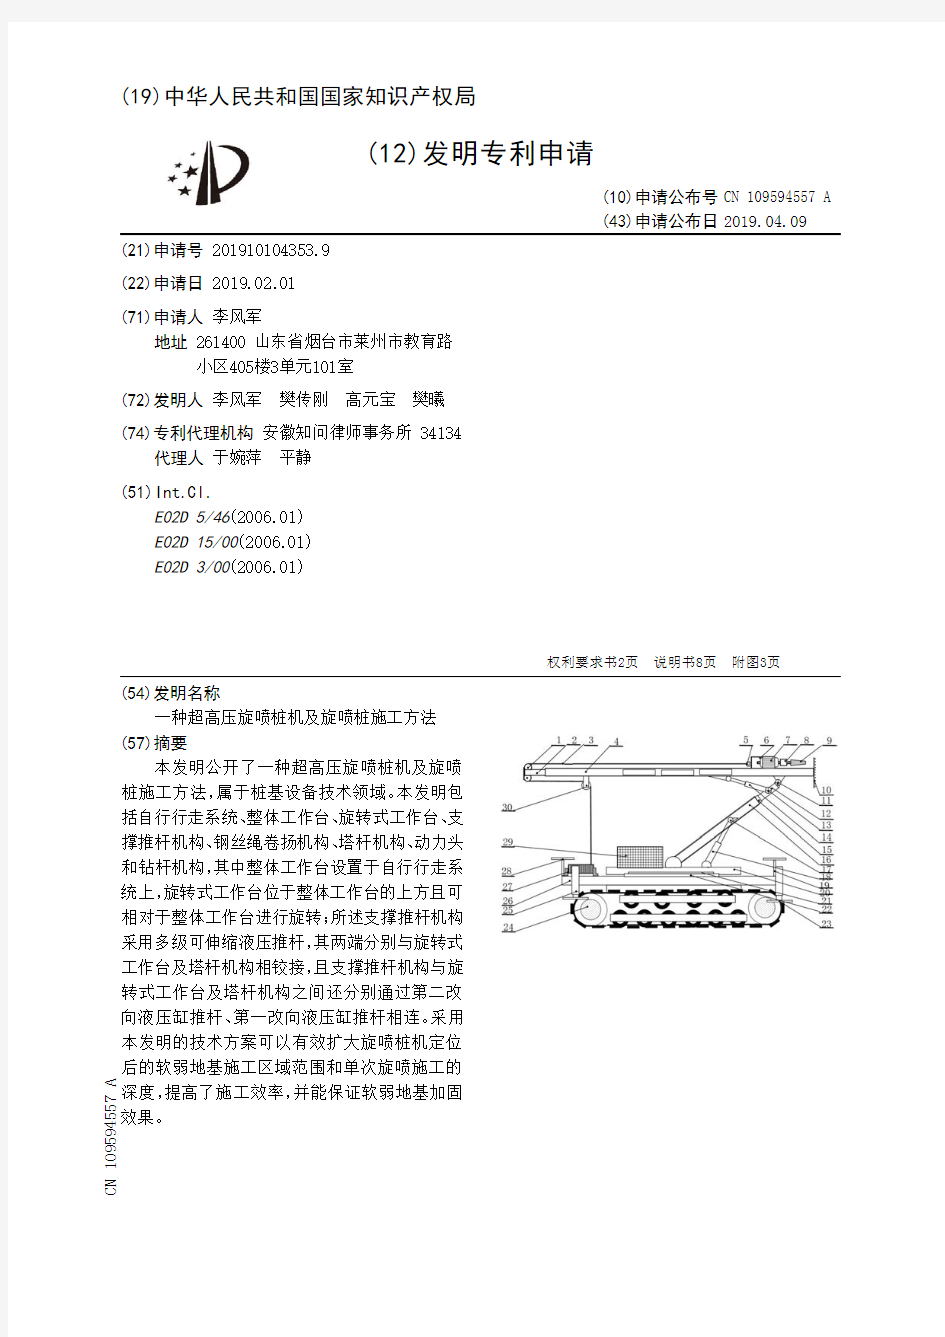 【CN109594557A】一种超高压旋喷桩机及旋喷桩施工方法【专利】